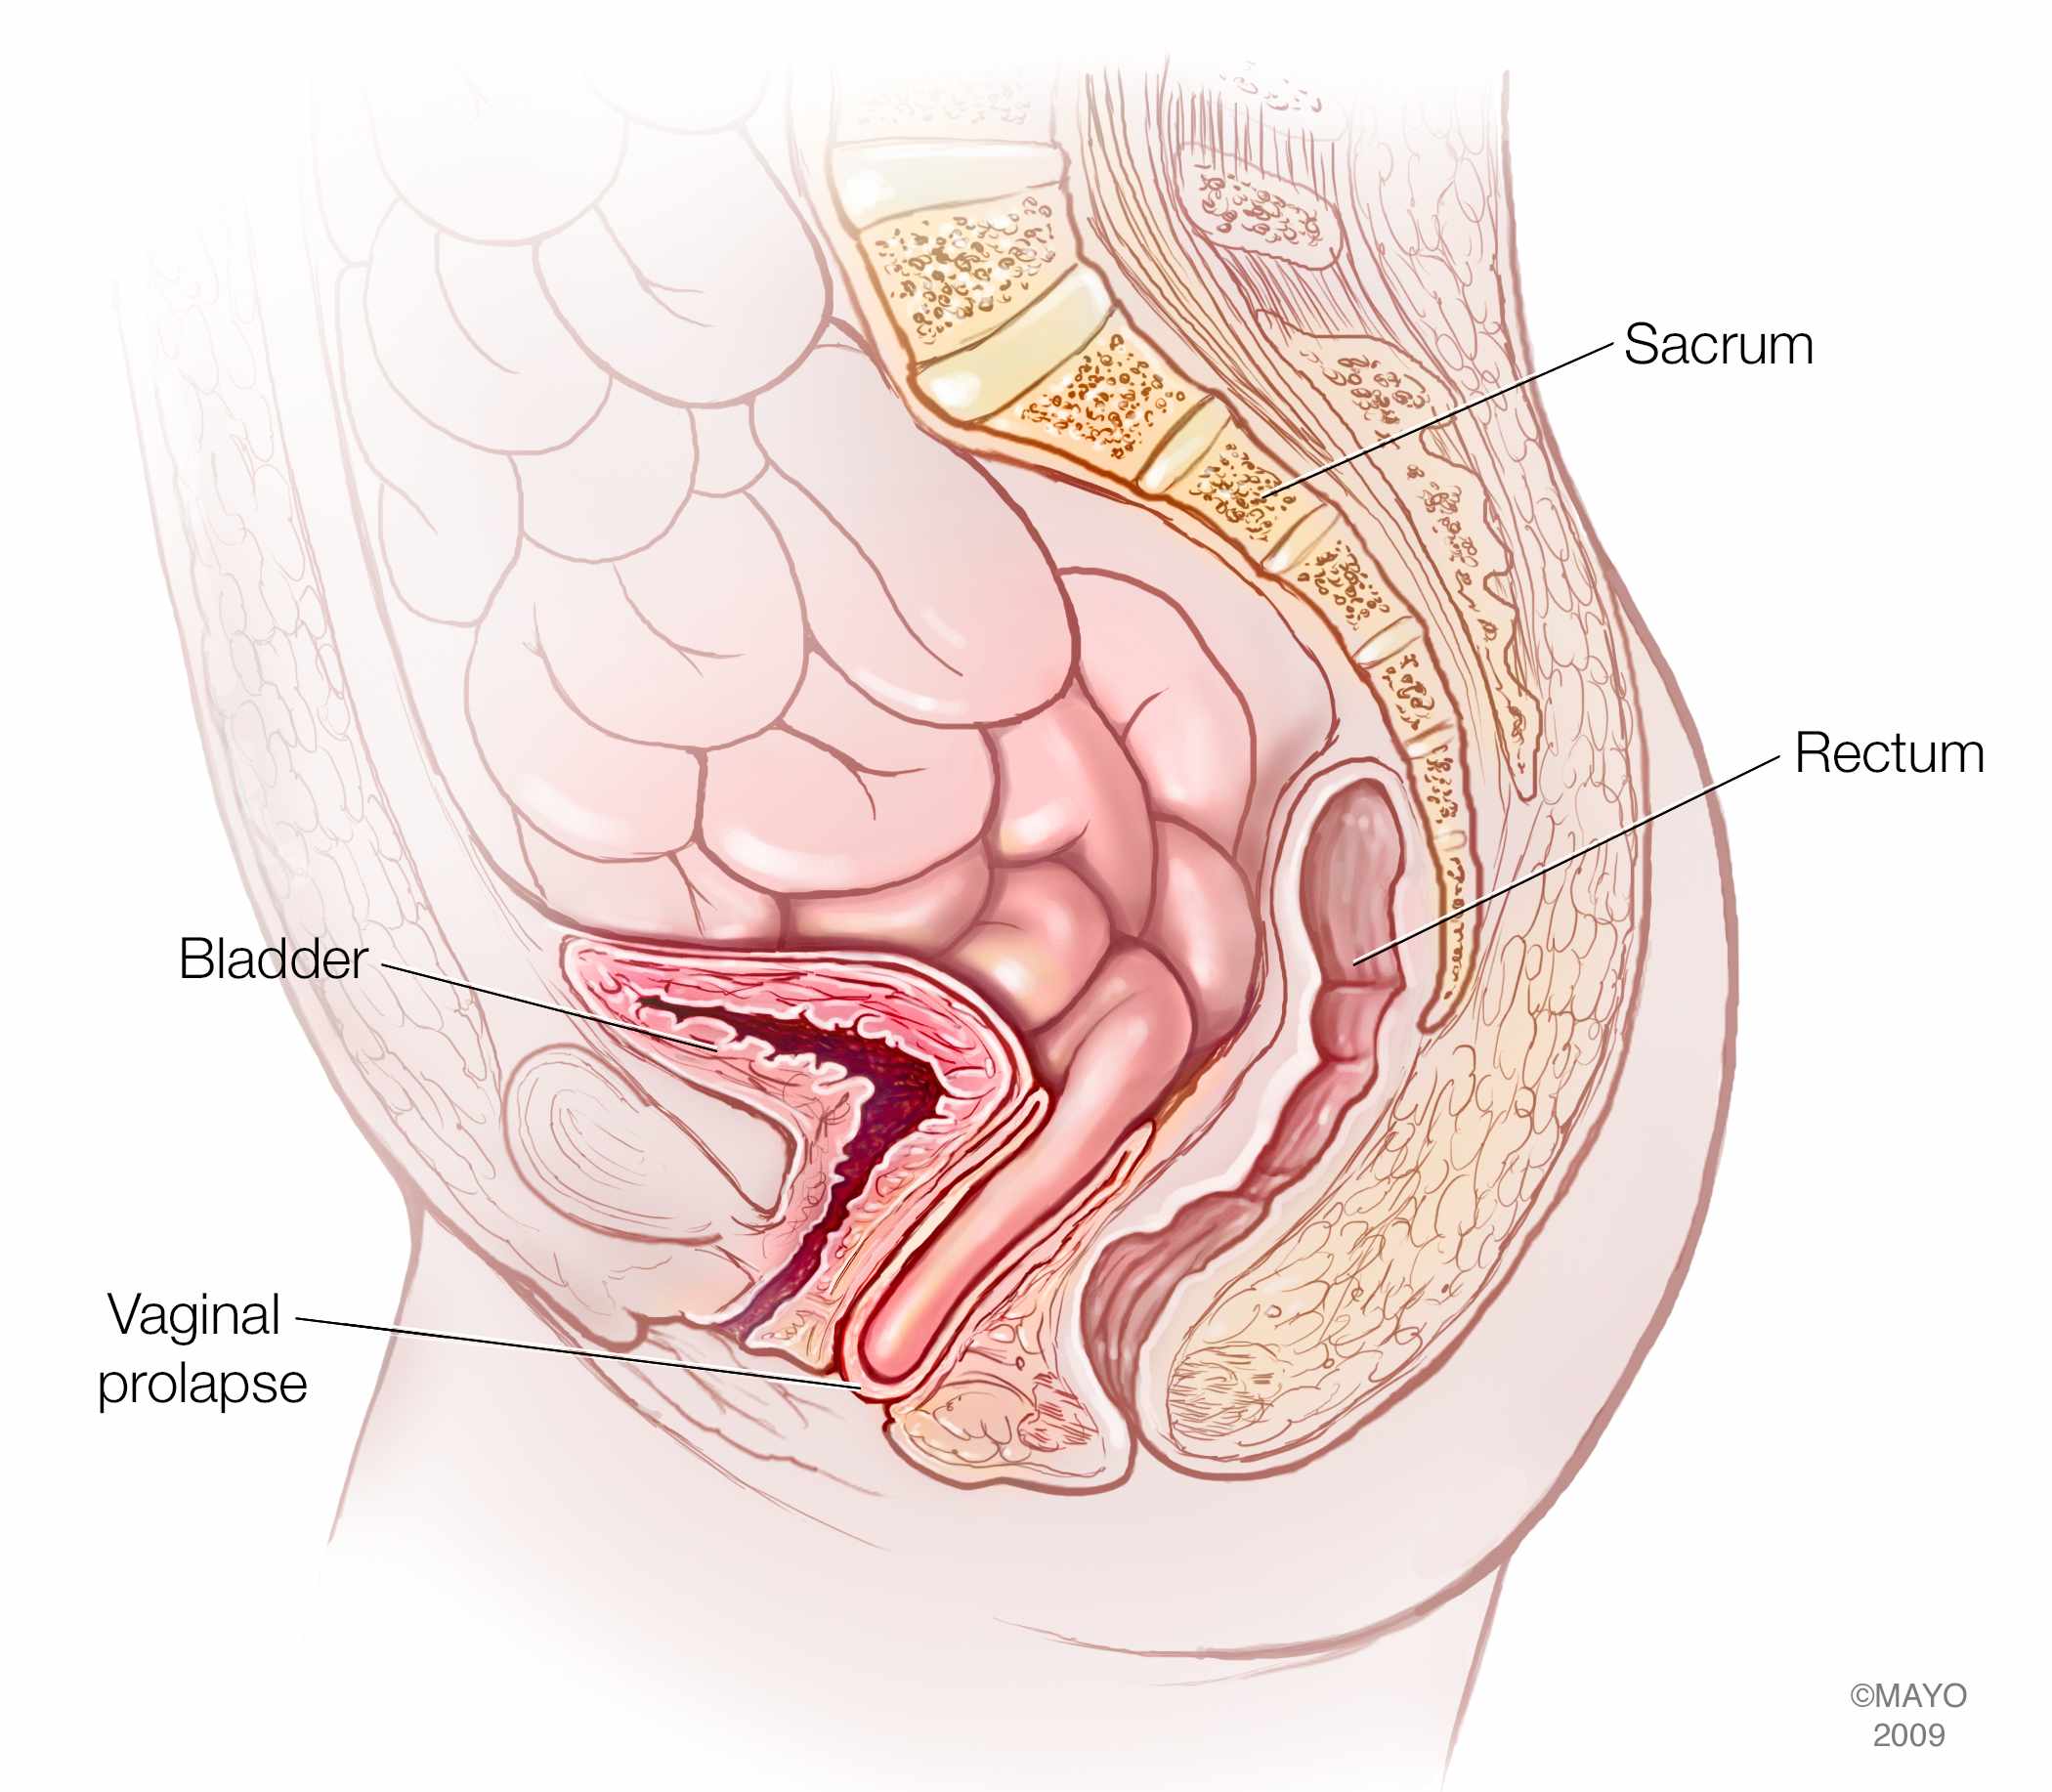 Uterine prolapse - Symptoms and causes - Mayo Clinic